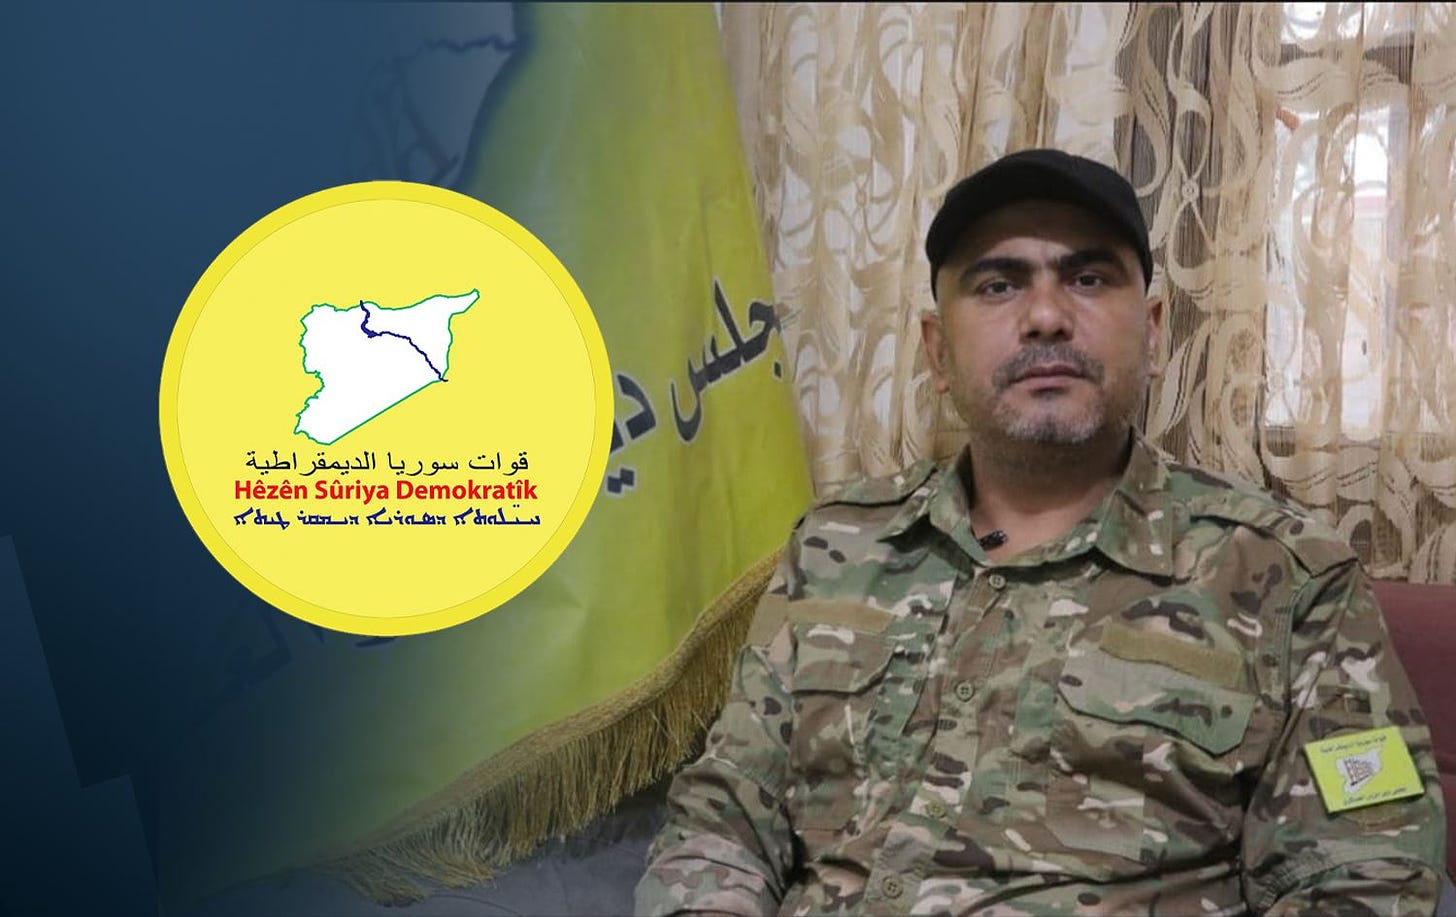 SDF arrests top commander, causing unrest in... | Rudaw.net